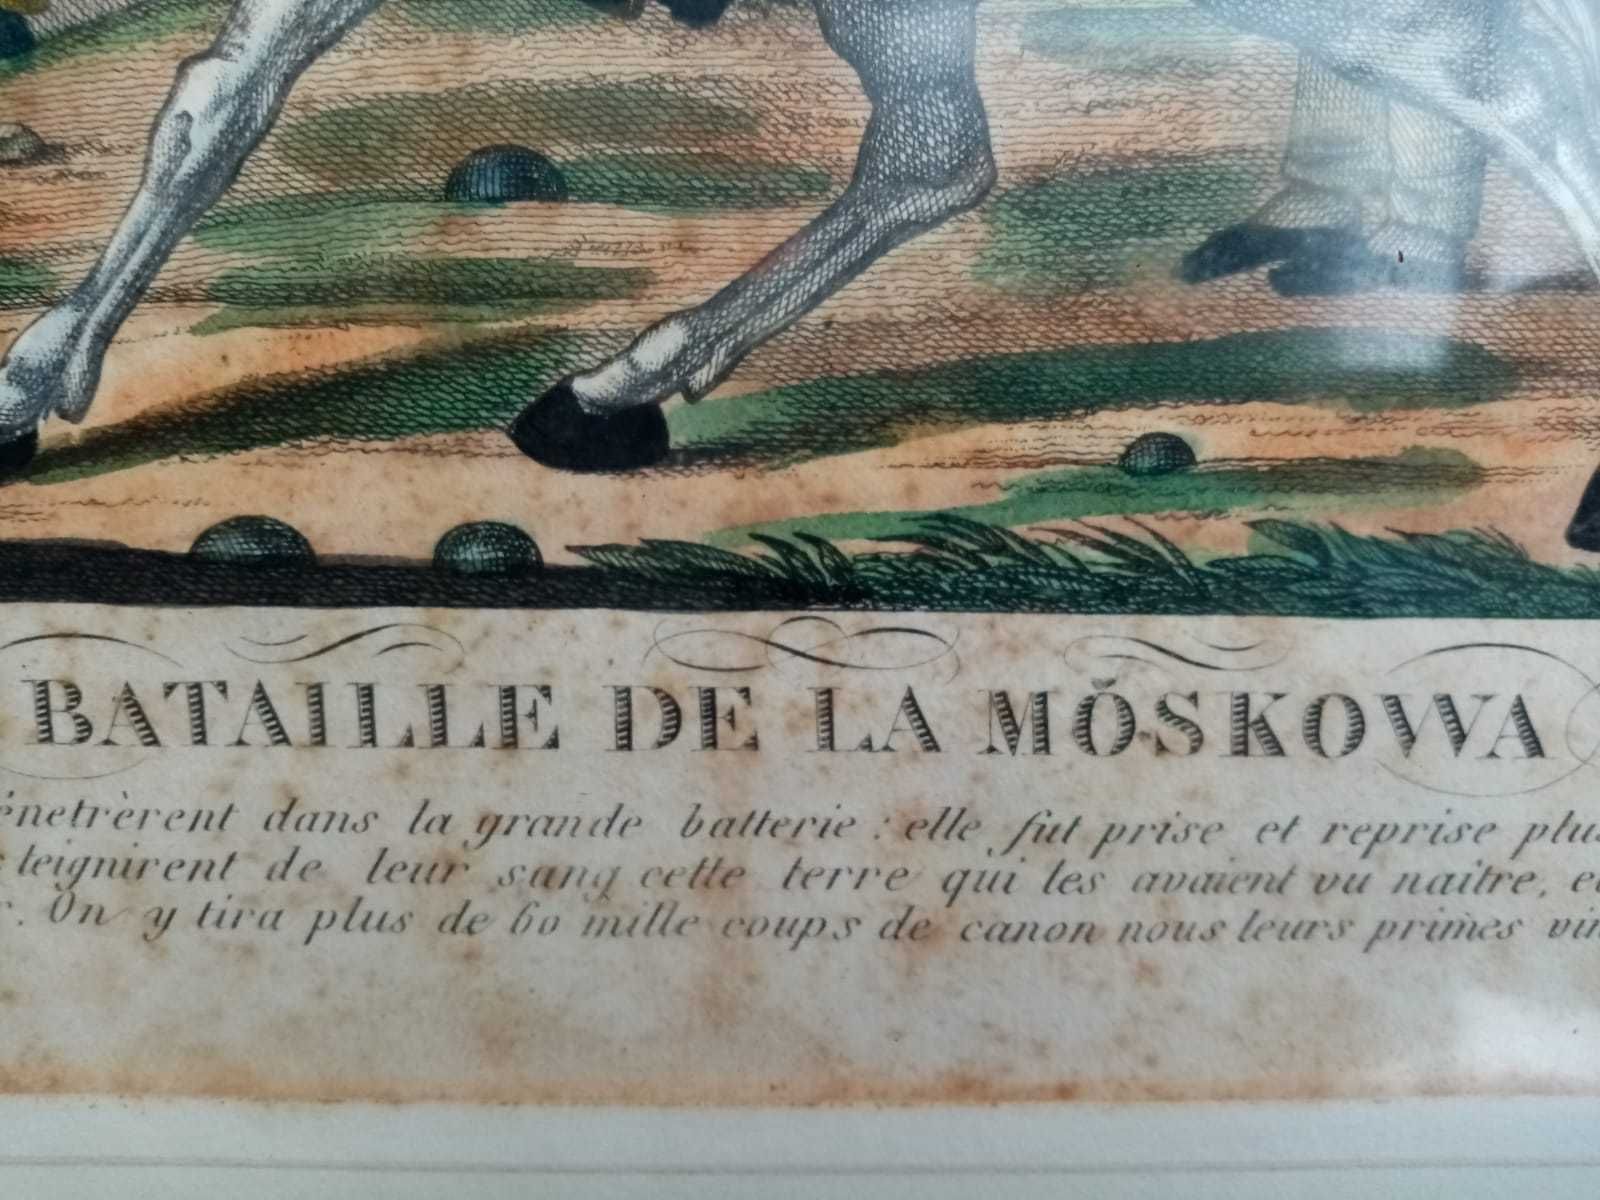 gravura antiga: “Bataille de la Moskowa”